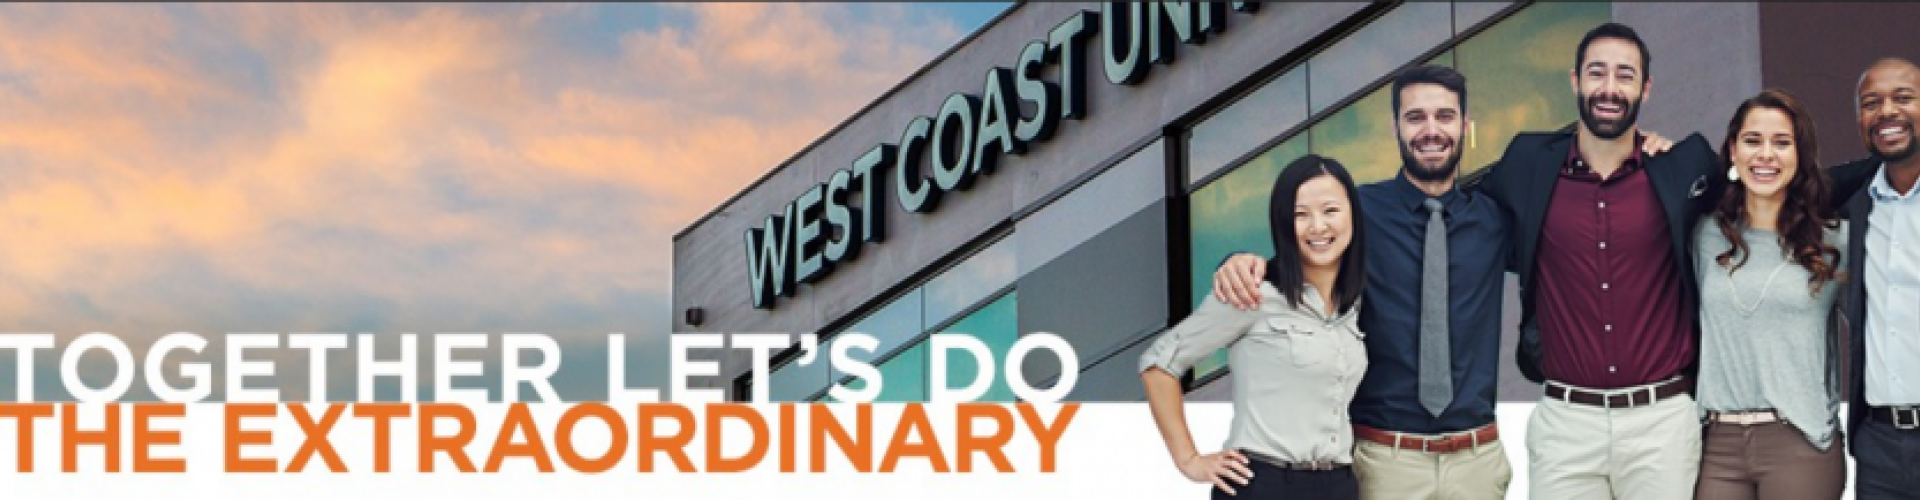 West Coast University cover